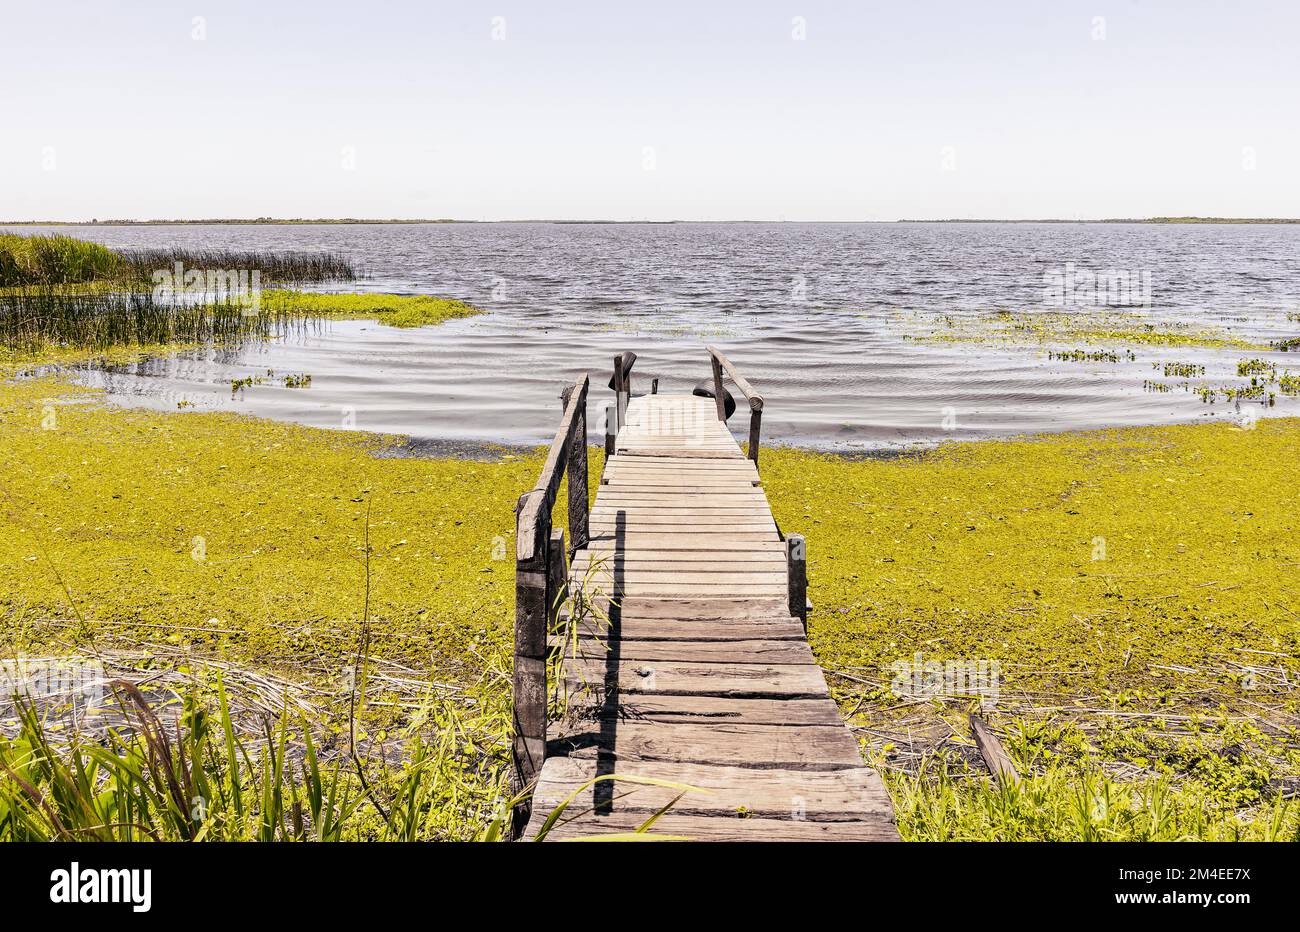 Landscape of an old wooden pier in Ibera Lagoon, Colonia Carlos Pellegrini, Ibera Wetlands, Corrientes, Argentina. Stock Photo